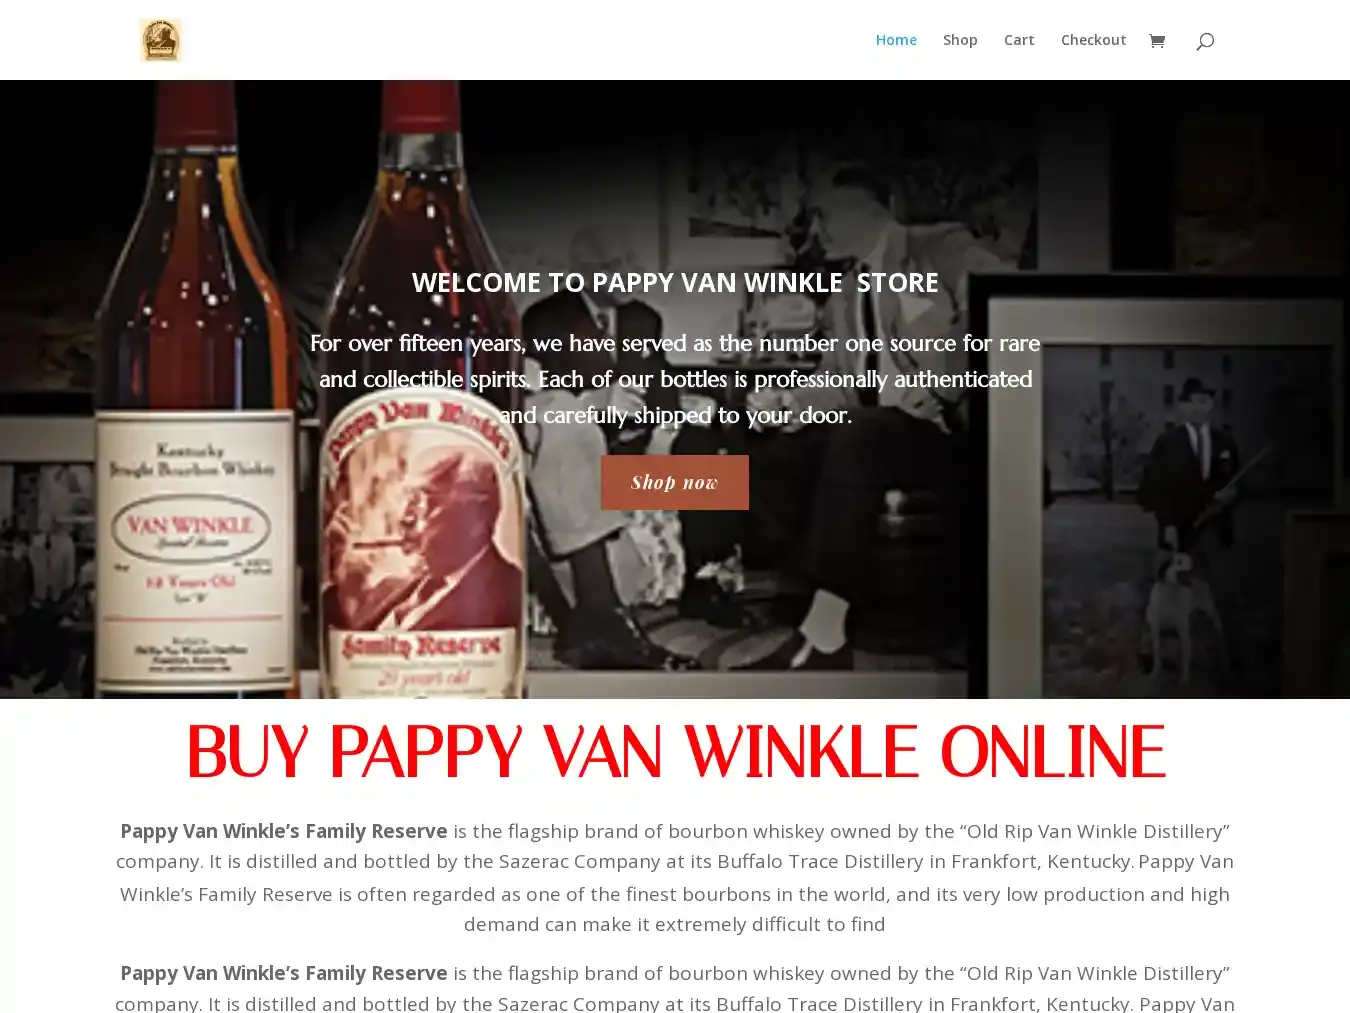 Pappyvanwinklestore.com Fraudulent Whisky website.